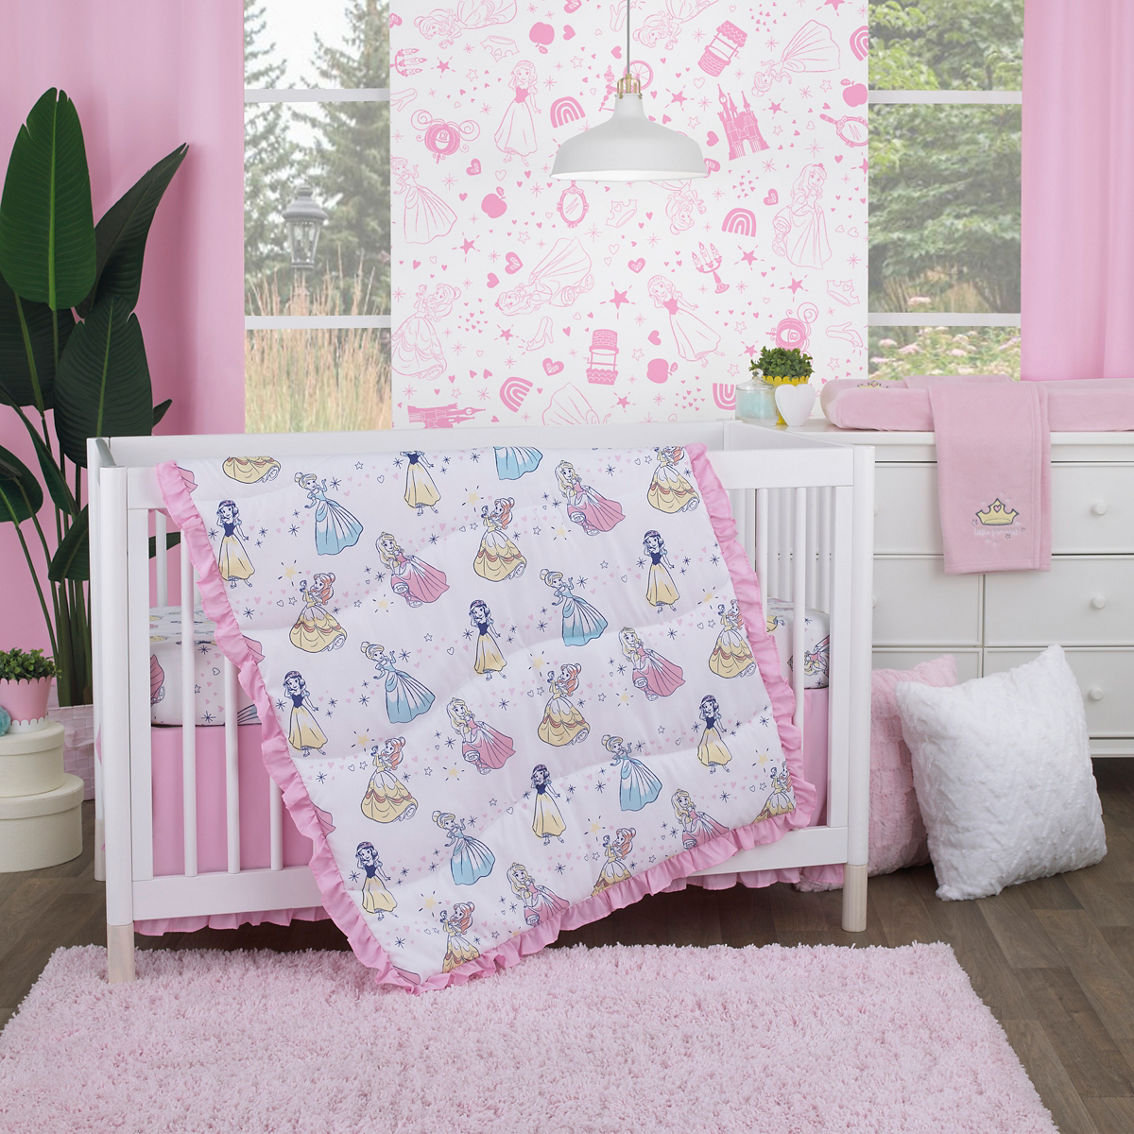 Disney Nursery Crib Bedding 6 pc. Set - Image 8 of 8